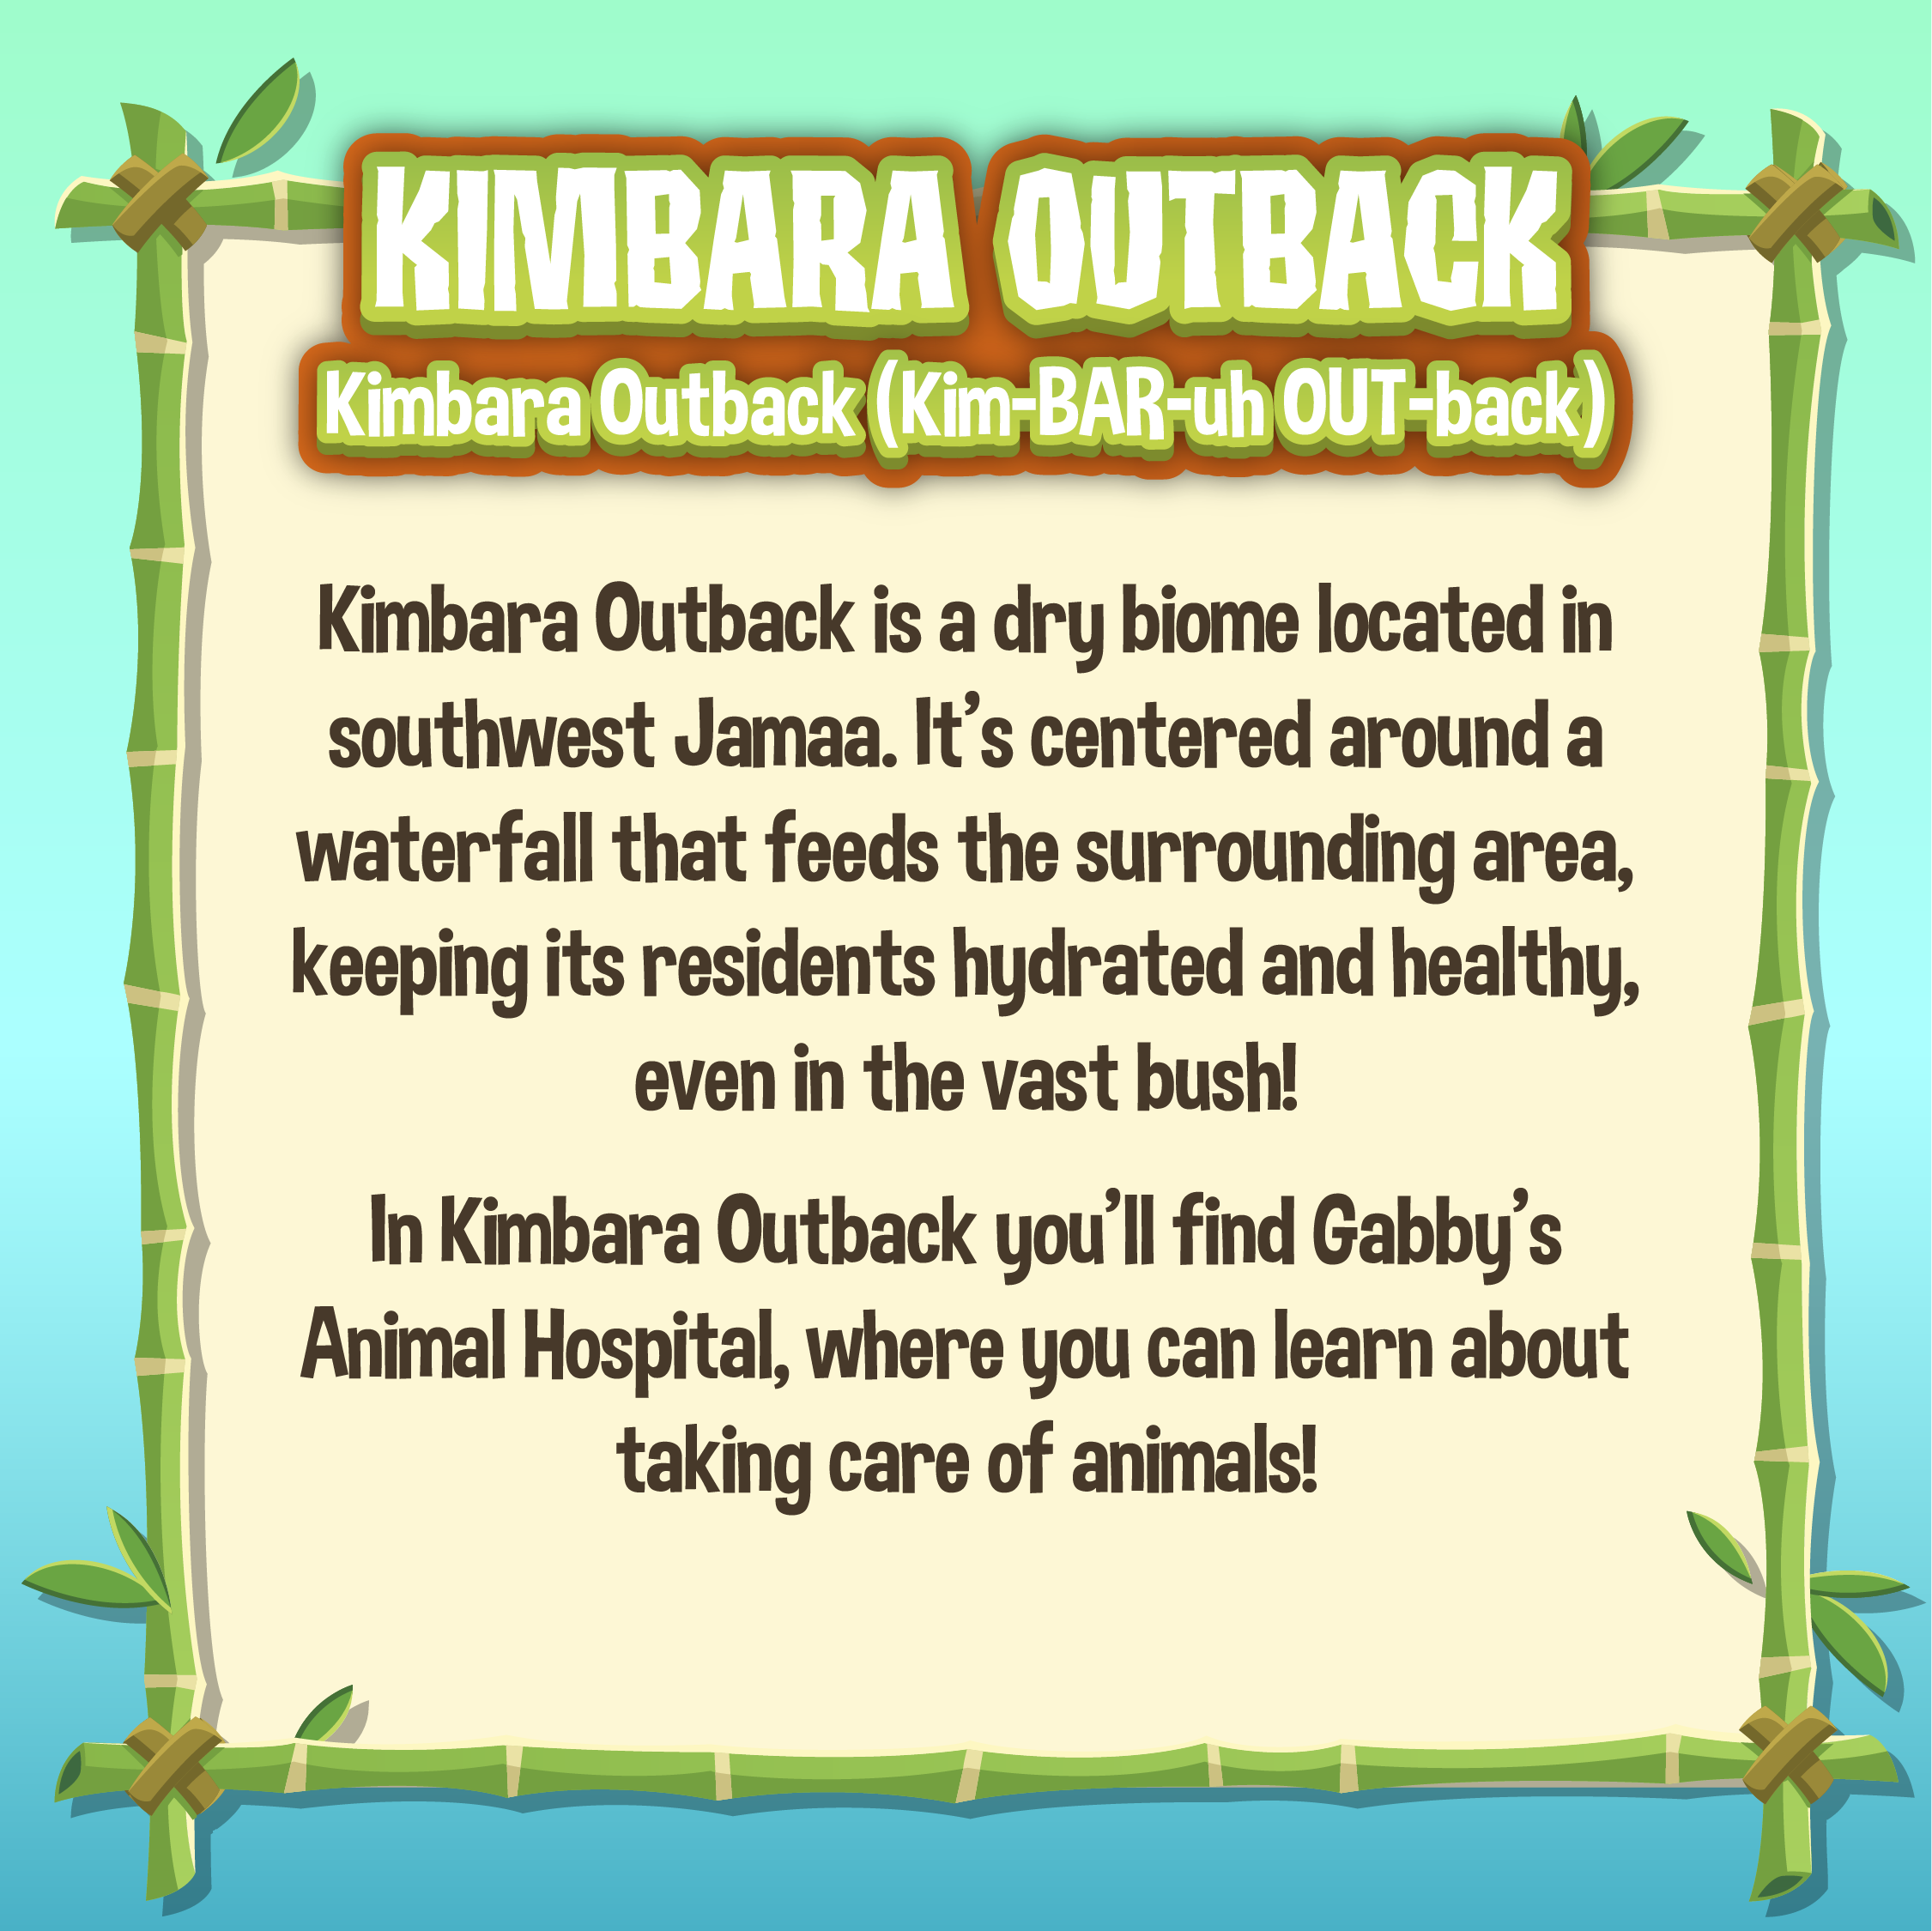 20211110 Kimbara Outback Pronunciation Guide-02